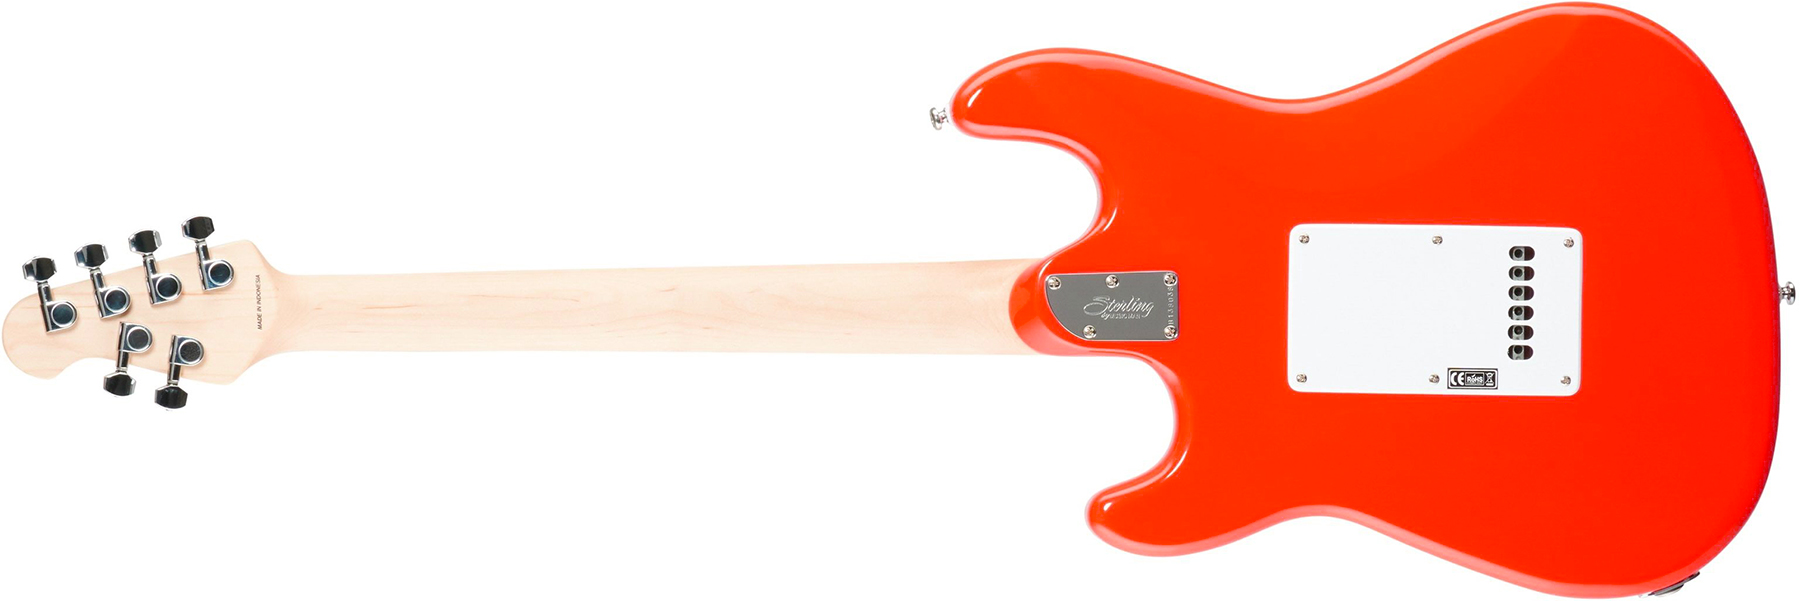 Sterling By Musicman Cutlass Ct30sss 3s Trem Mn - Fiesta Red - Str shape electric guitar - Variation 1